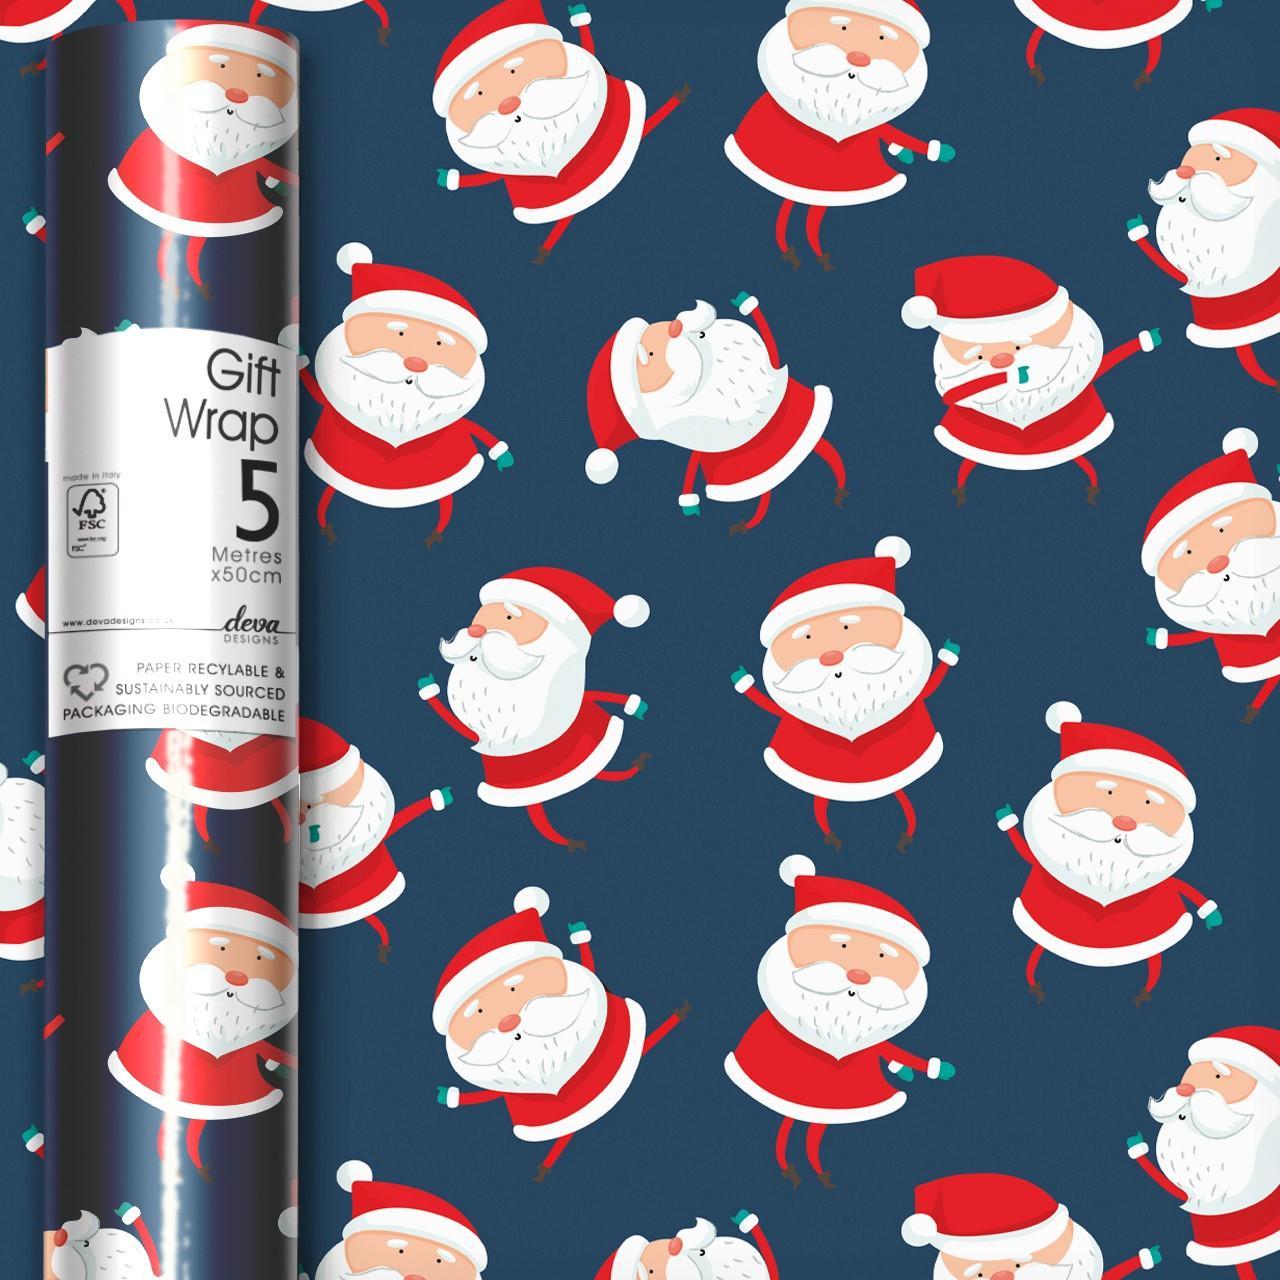 Christmas Gift Wrap Roll | 5m x 50cm Dancing Santa  by Weirs of Baggot Street